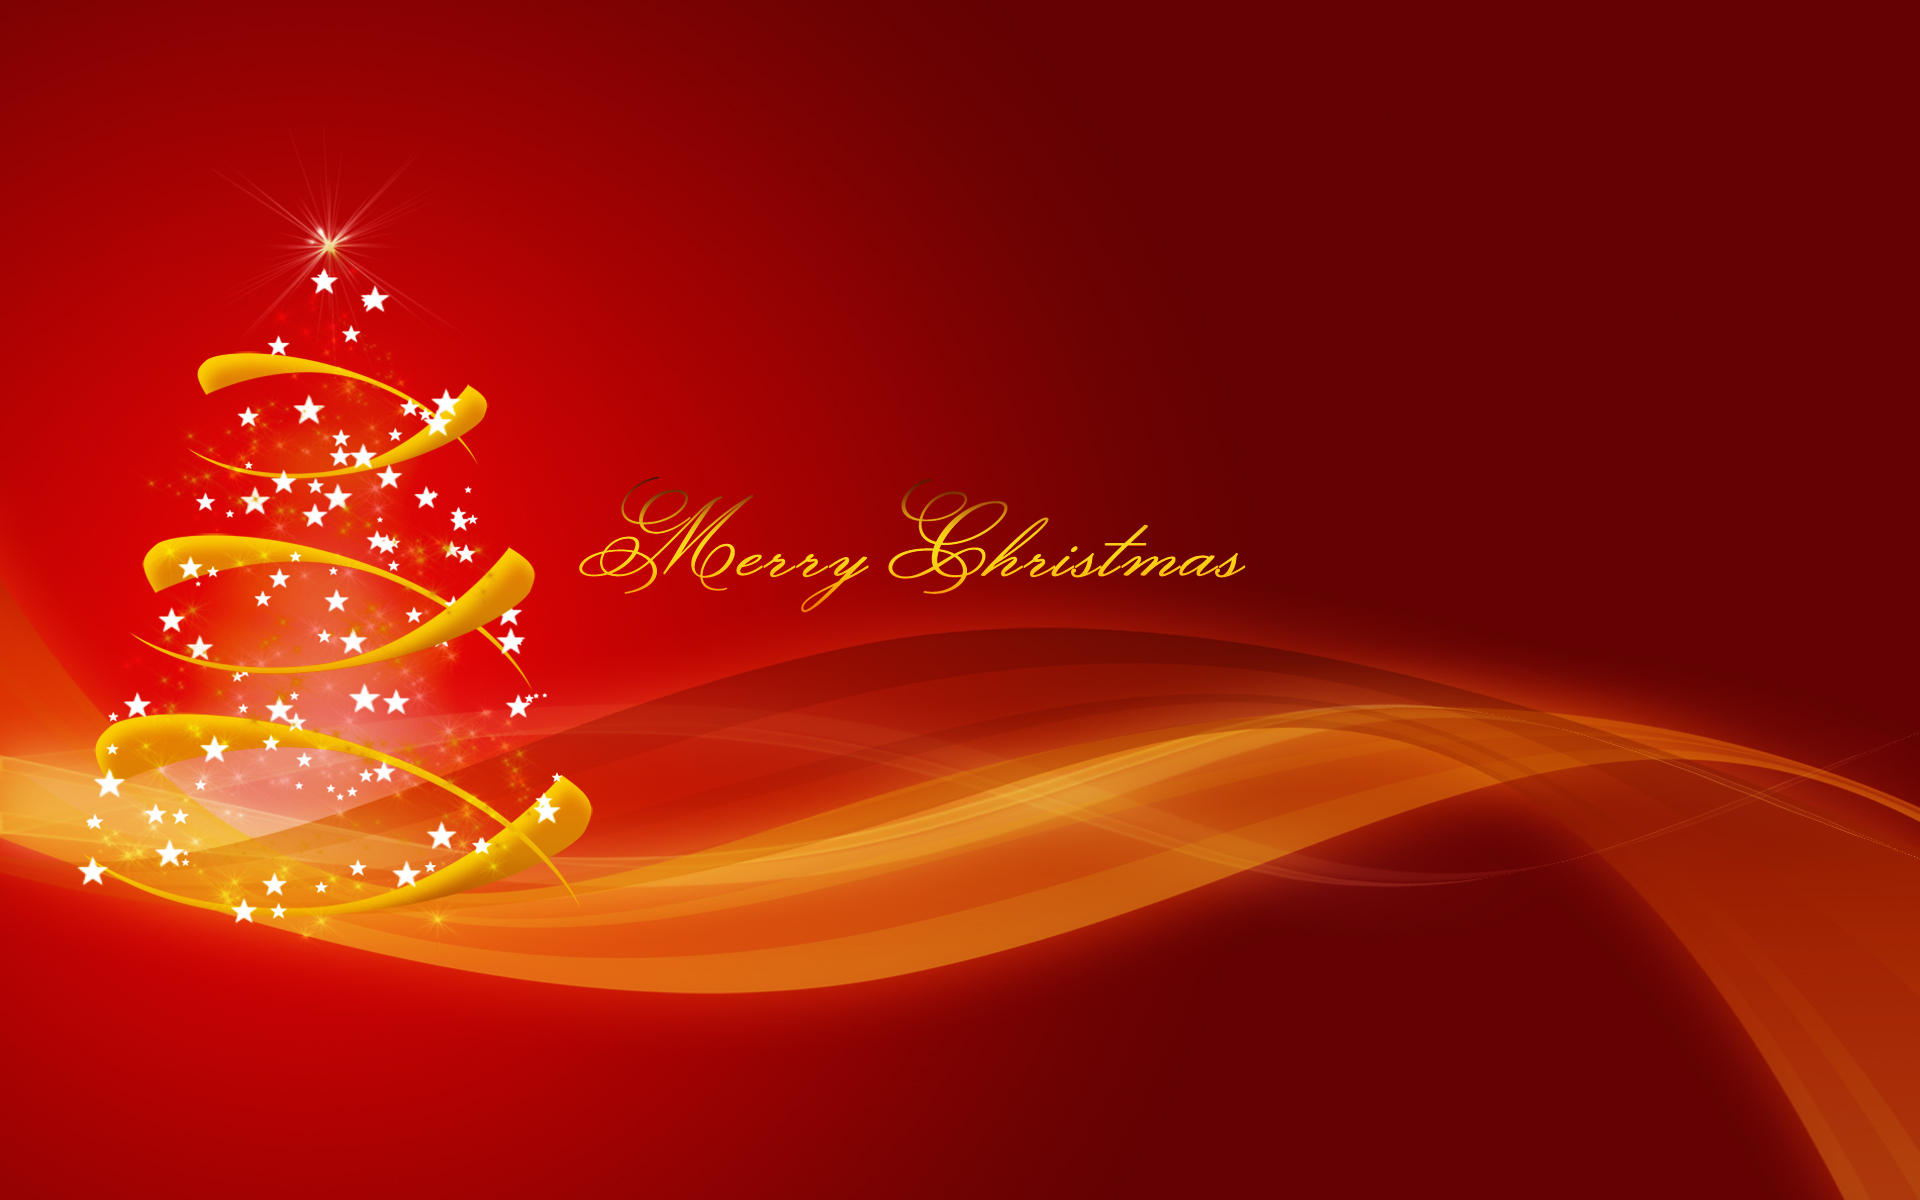 Merry_Christmas_2007_by_DigitalPhenom.jpg (1920×1200)